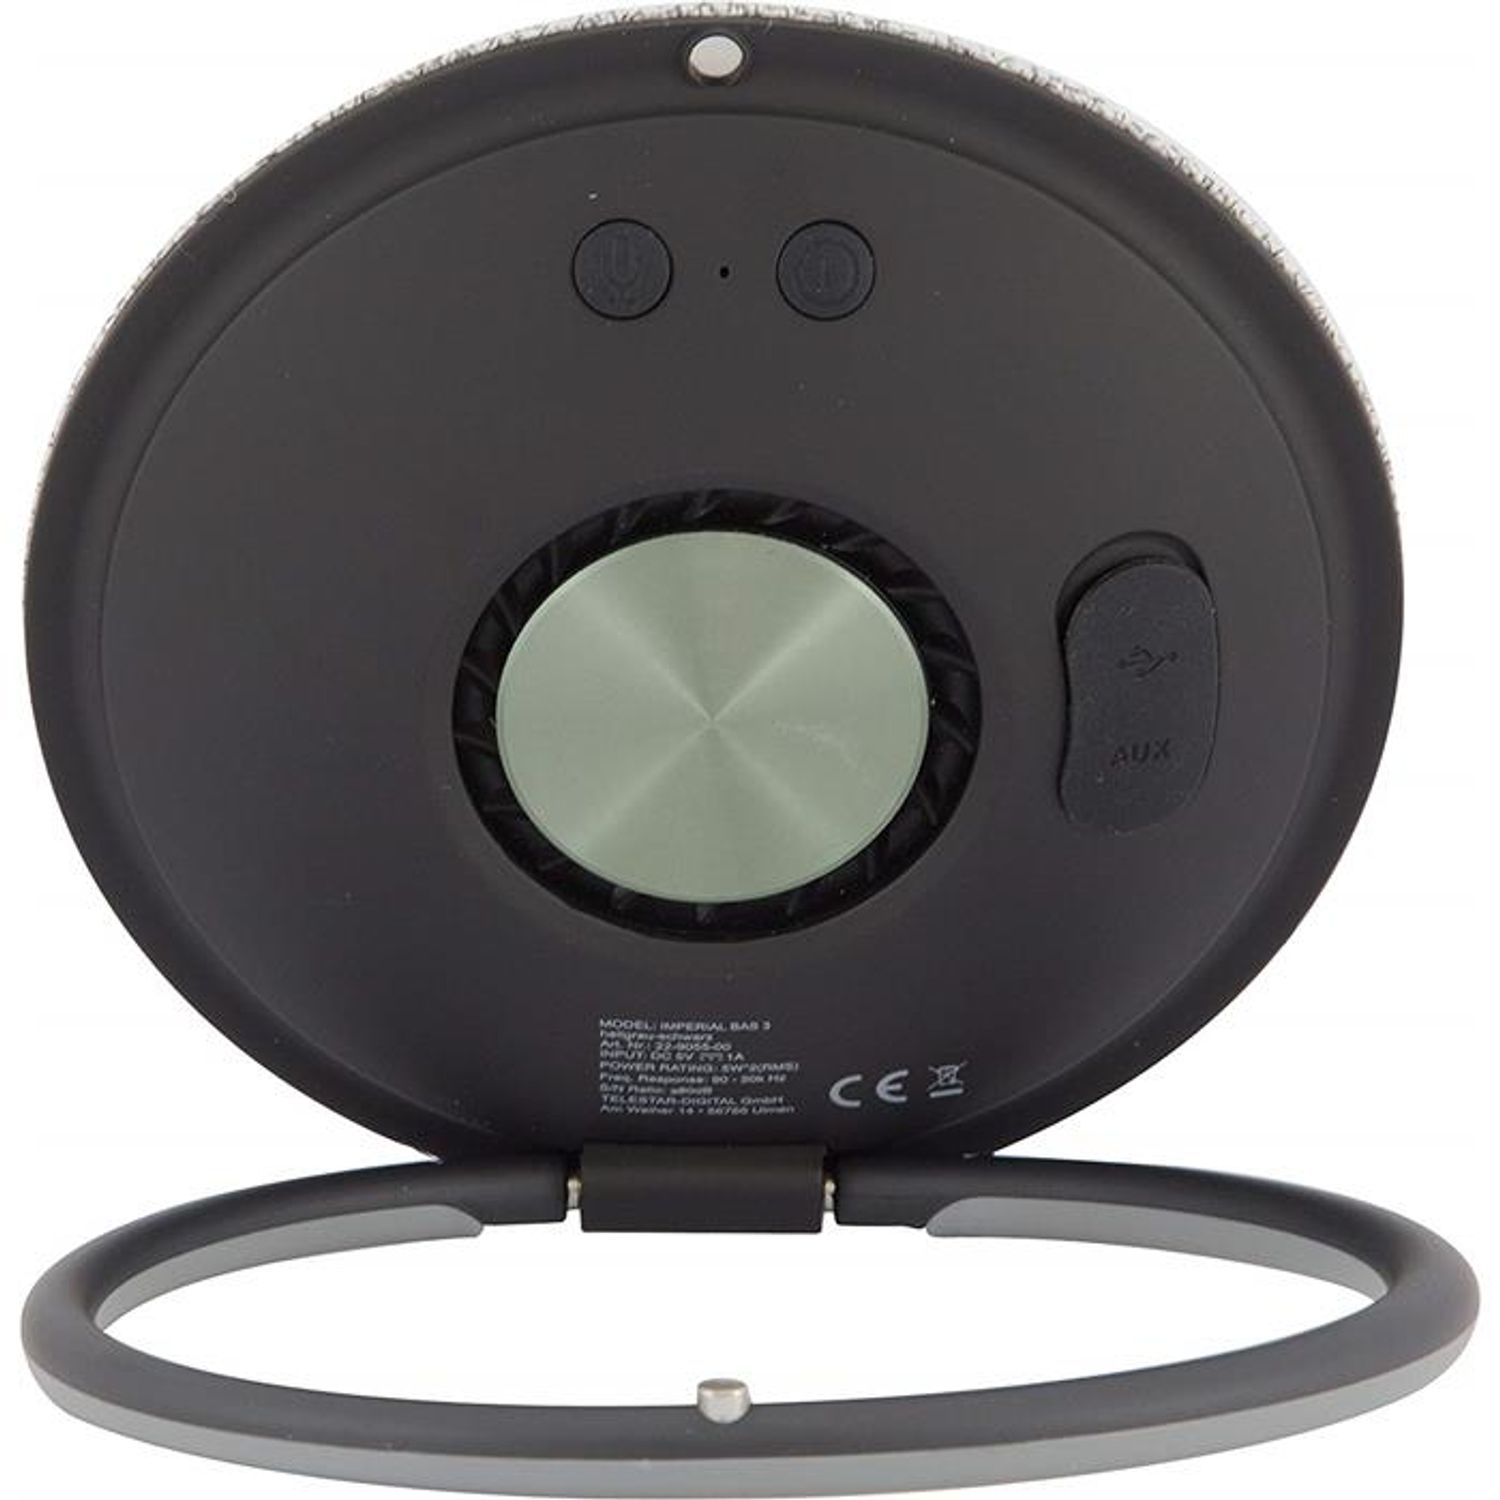 IMPERIAL BAS 3 Bluetooth-Lautsprecher, dunkelgrau/schwarz